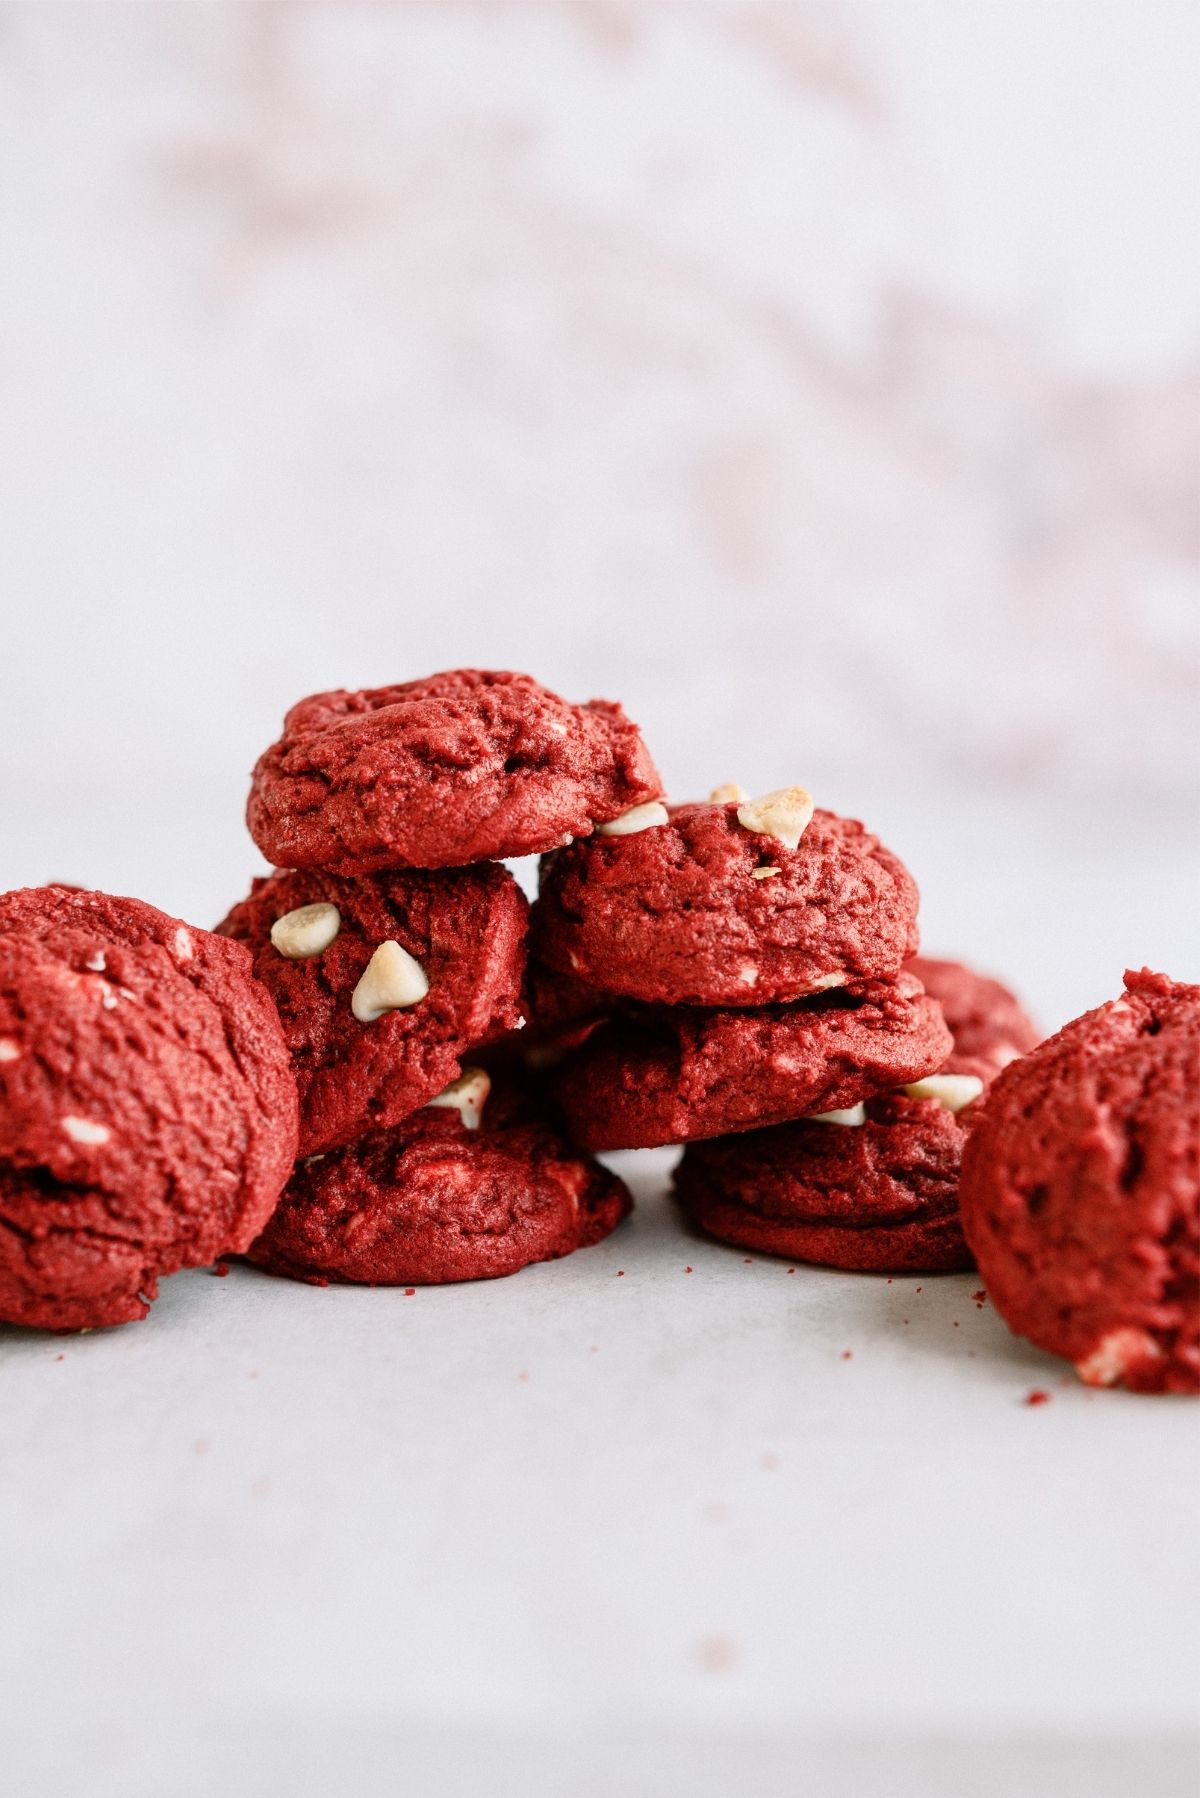 Red Velvet White Chocolate Chip Cookies Recipe
